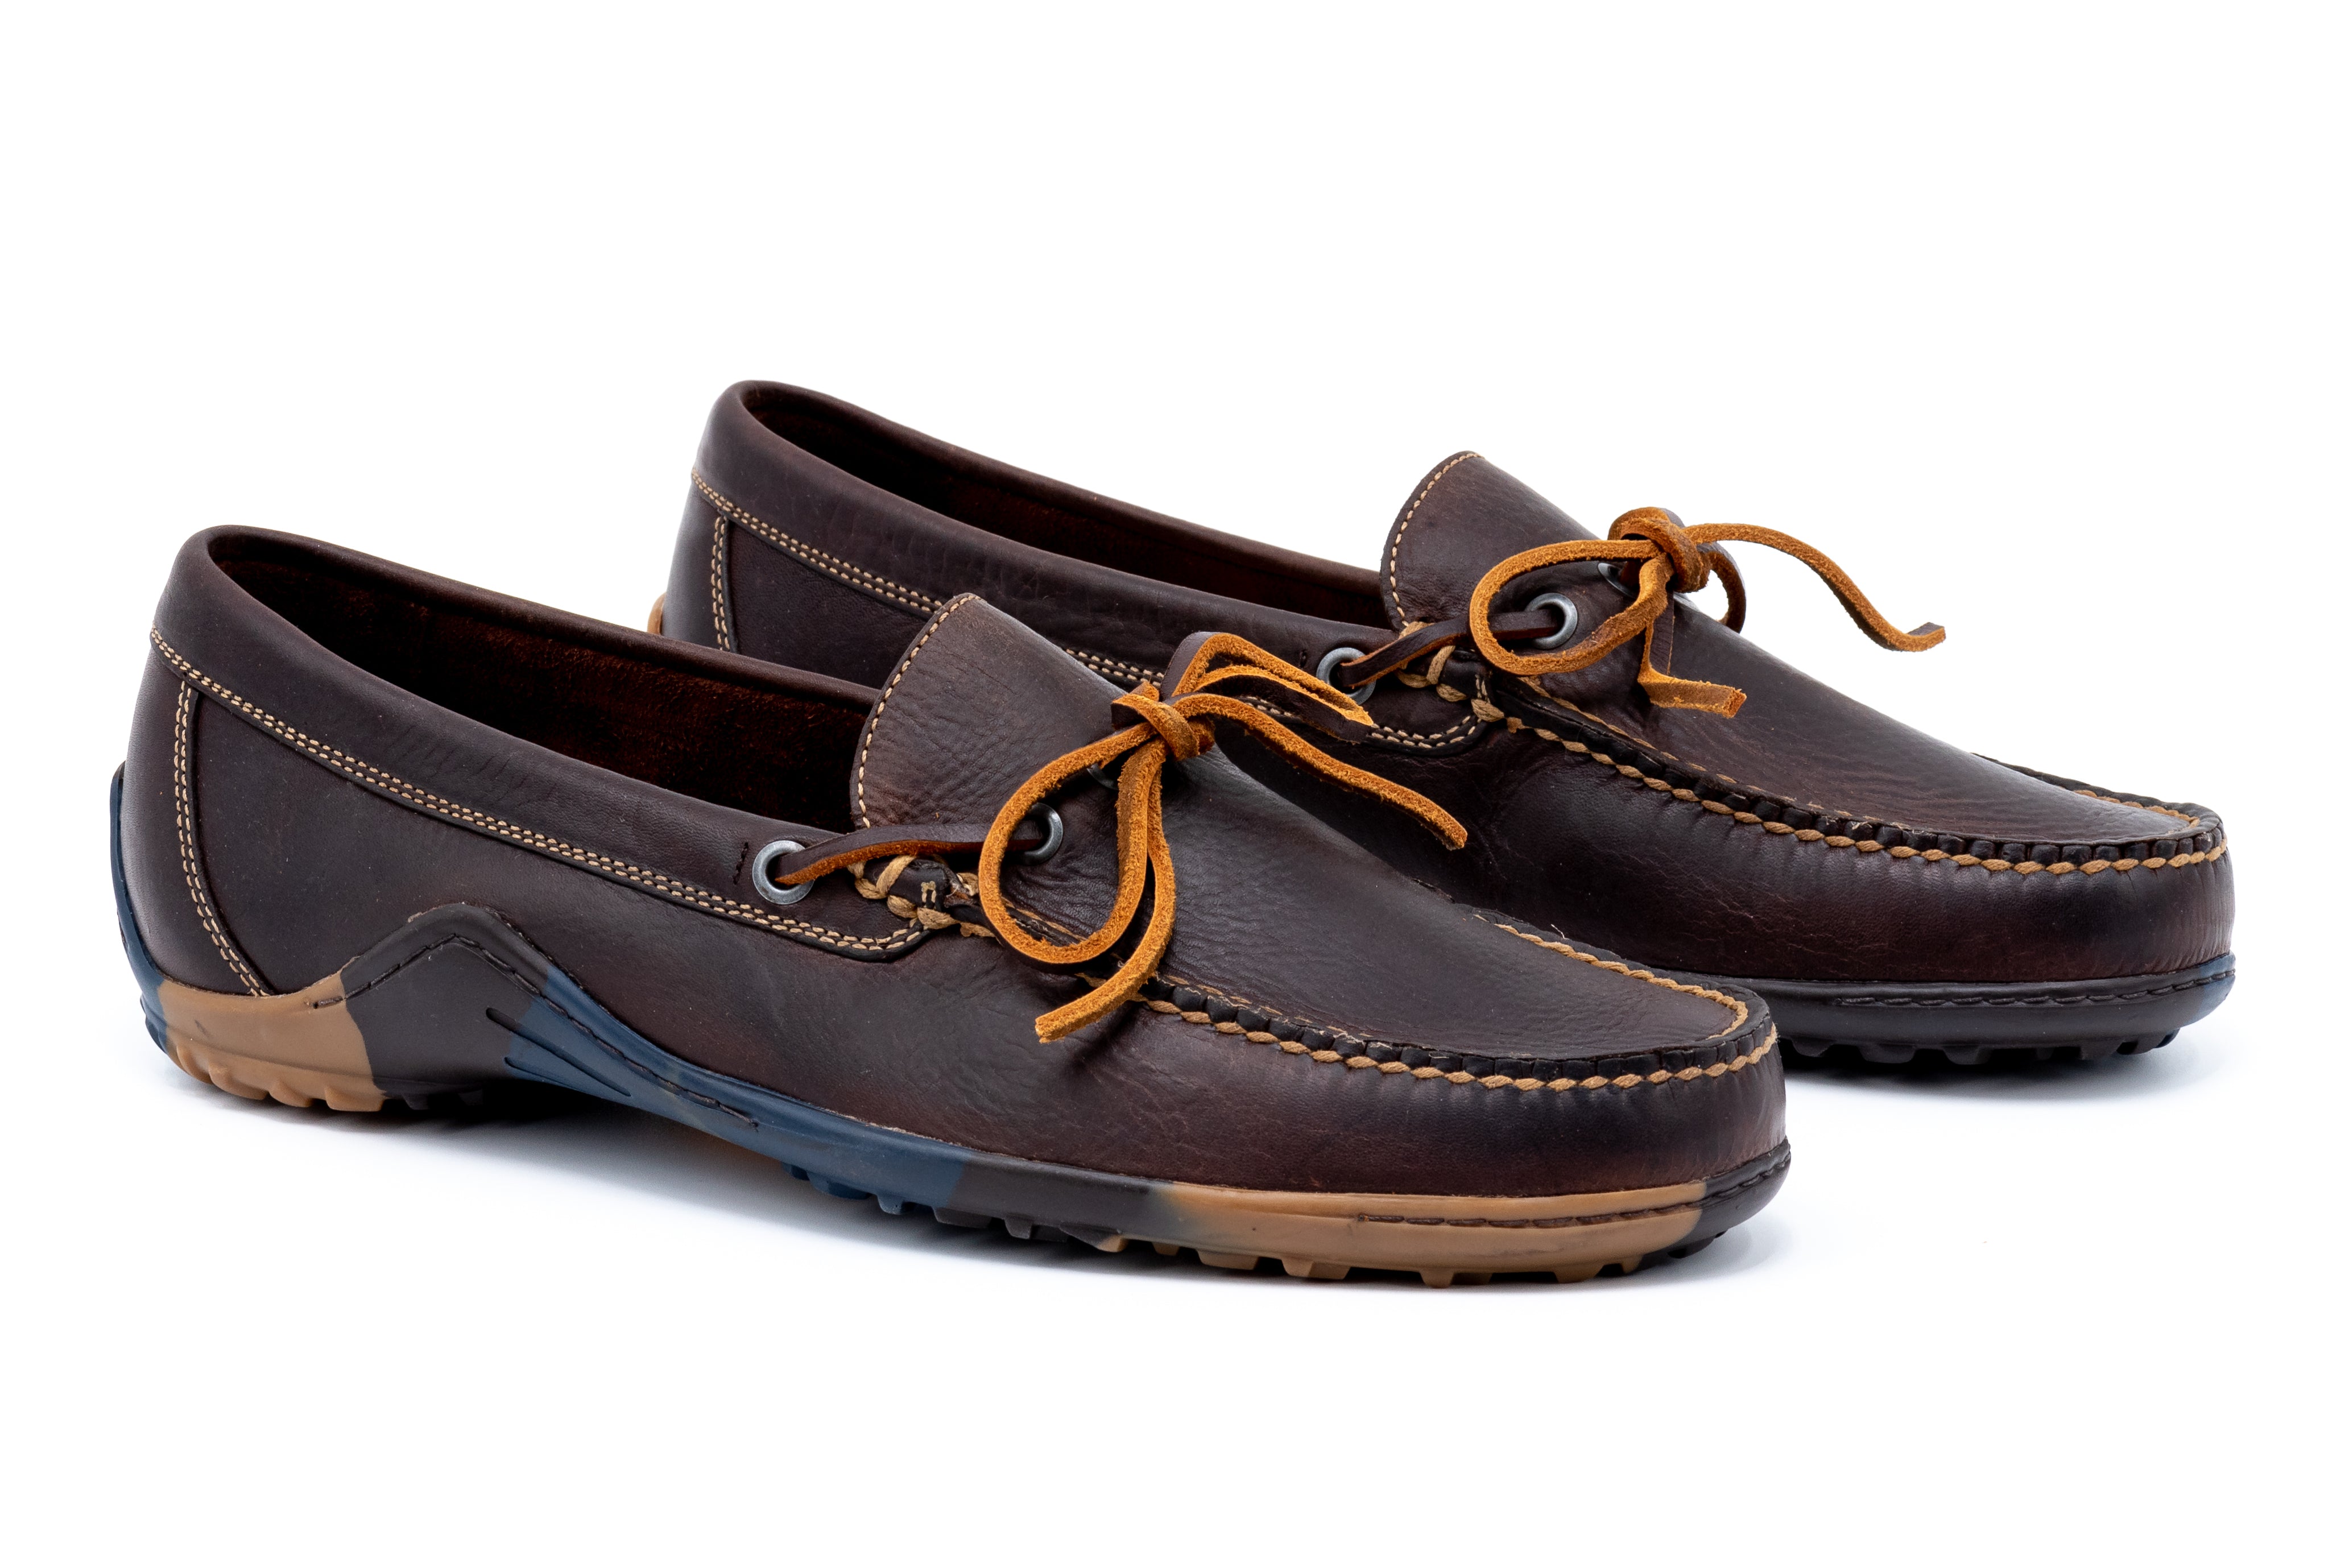 Bill Saddle Leather Bow Tie Loafers - Walnut